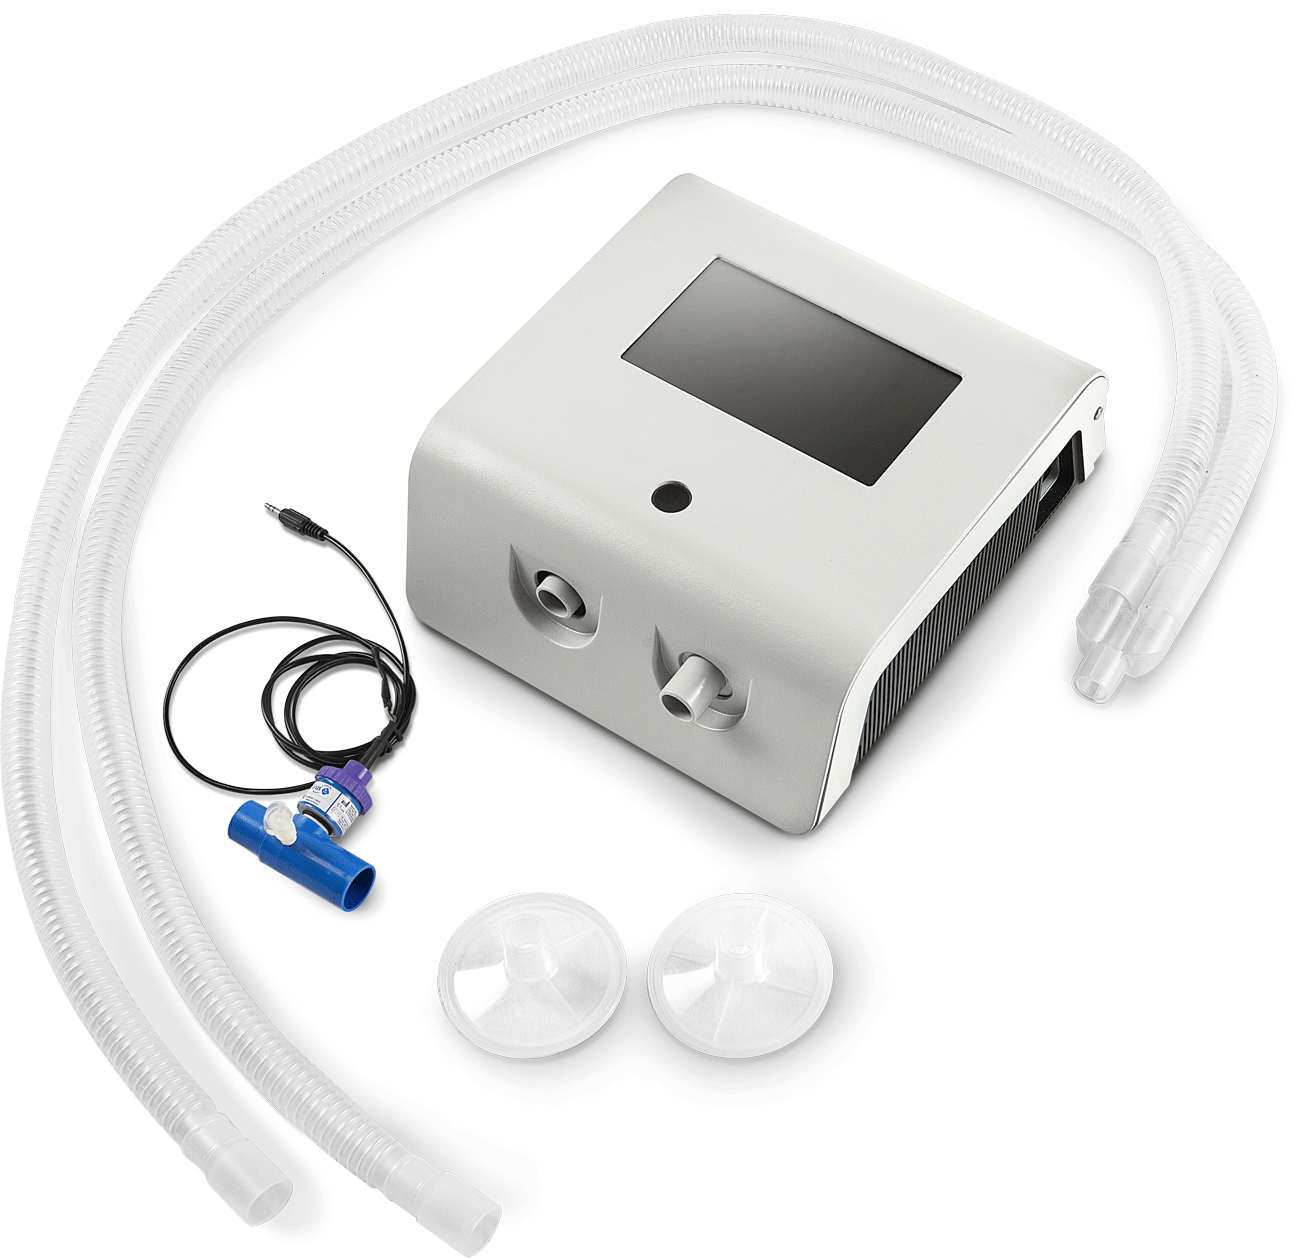 Alpha ventilator with accessories